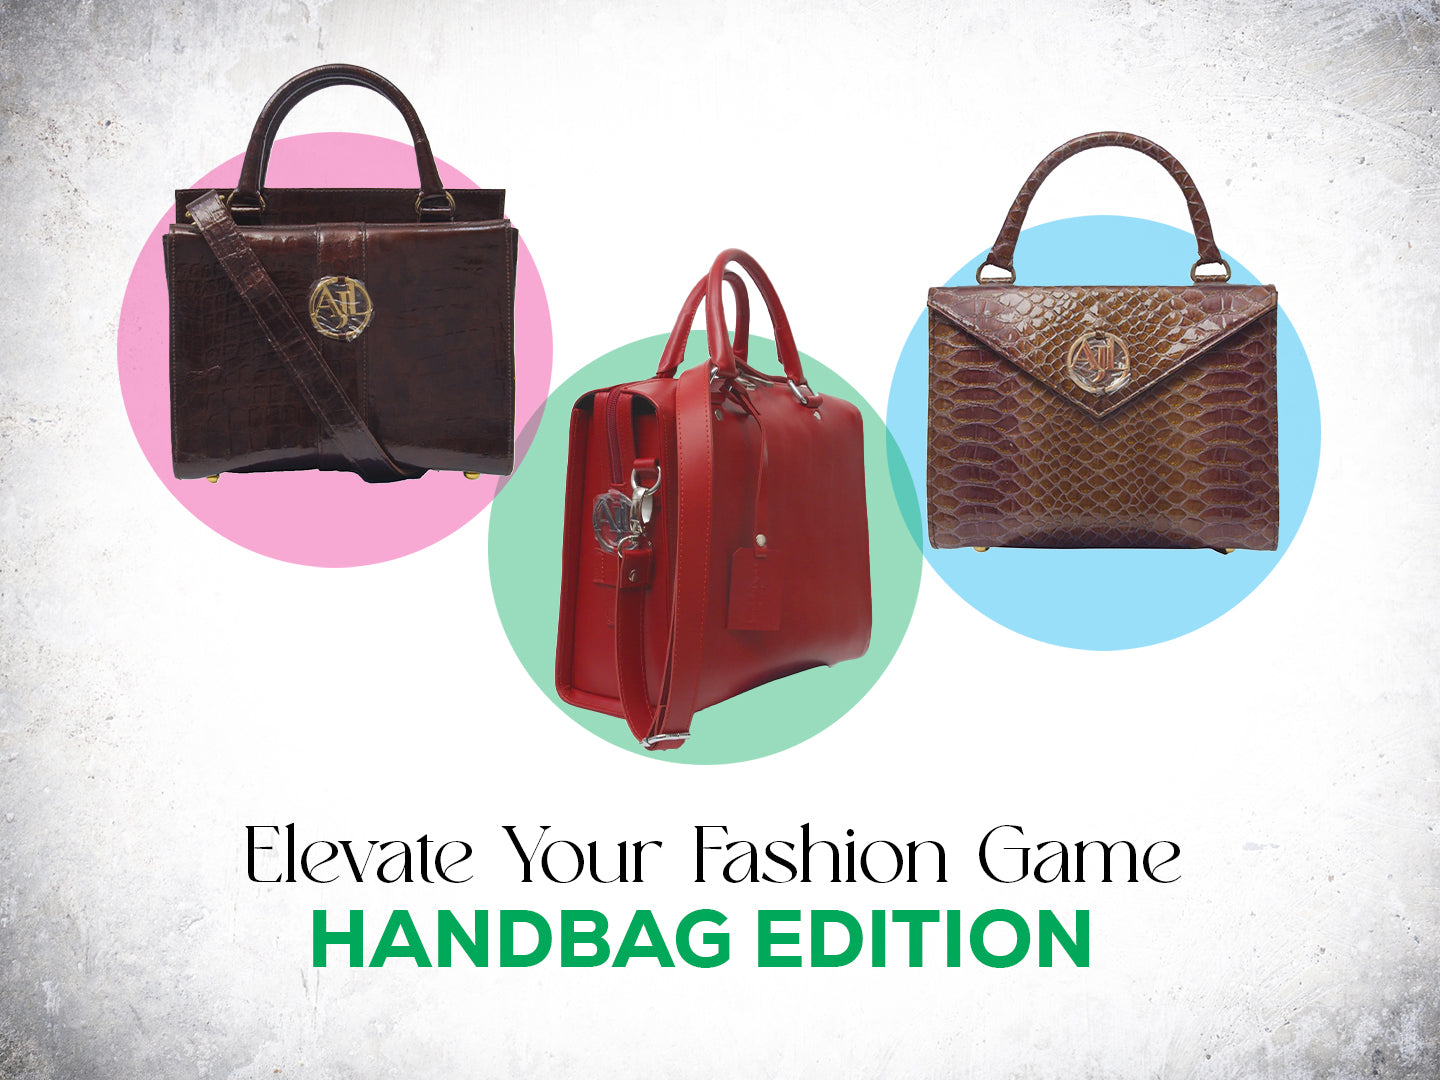 Elevate your Fashion Game - Handbag Edition